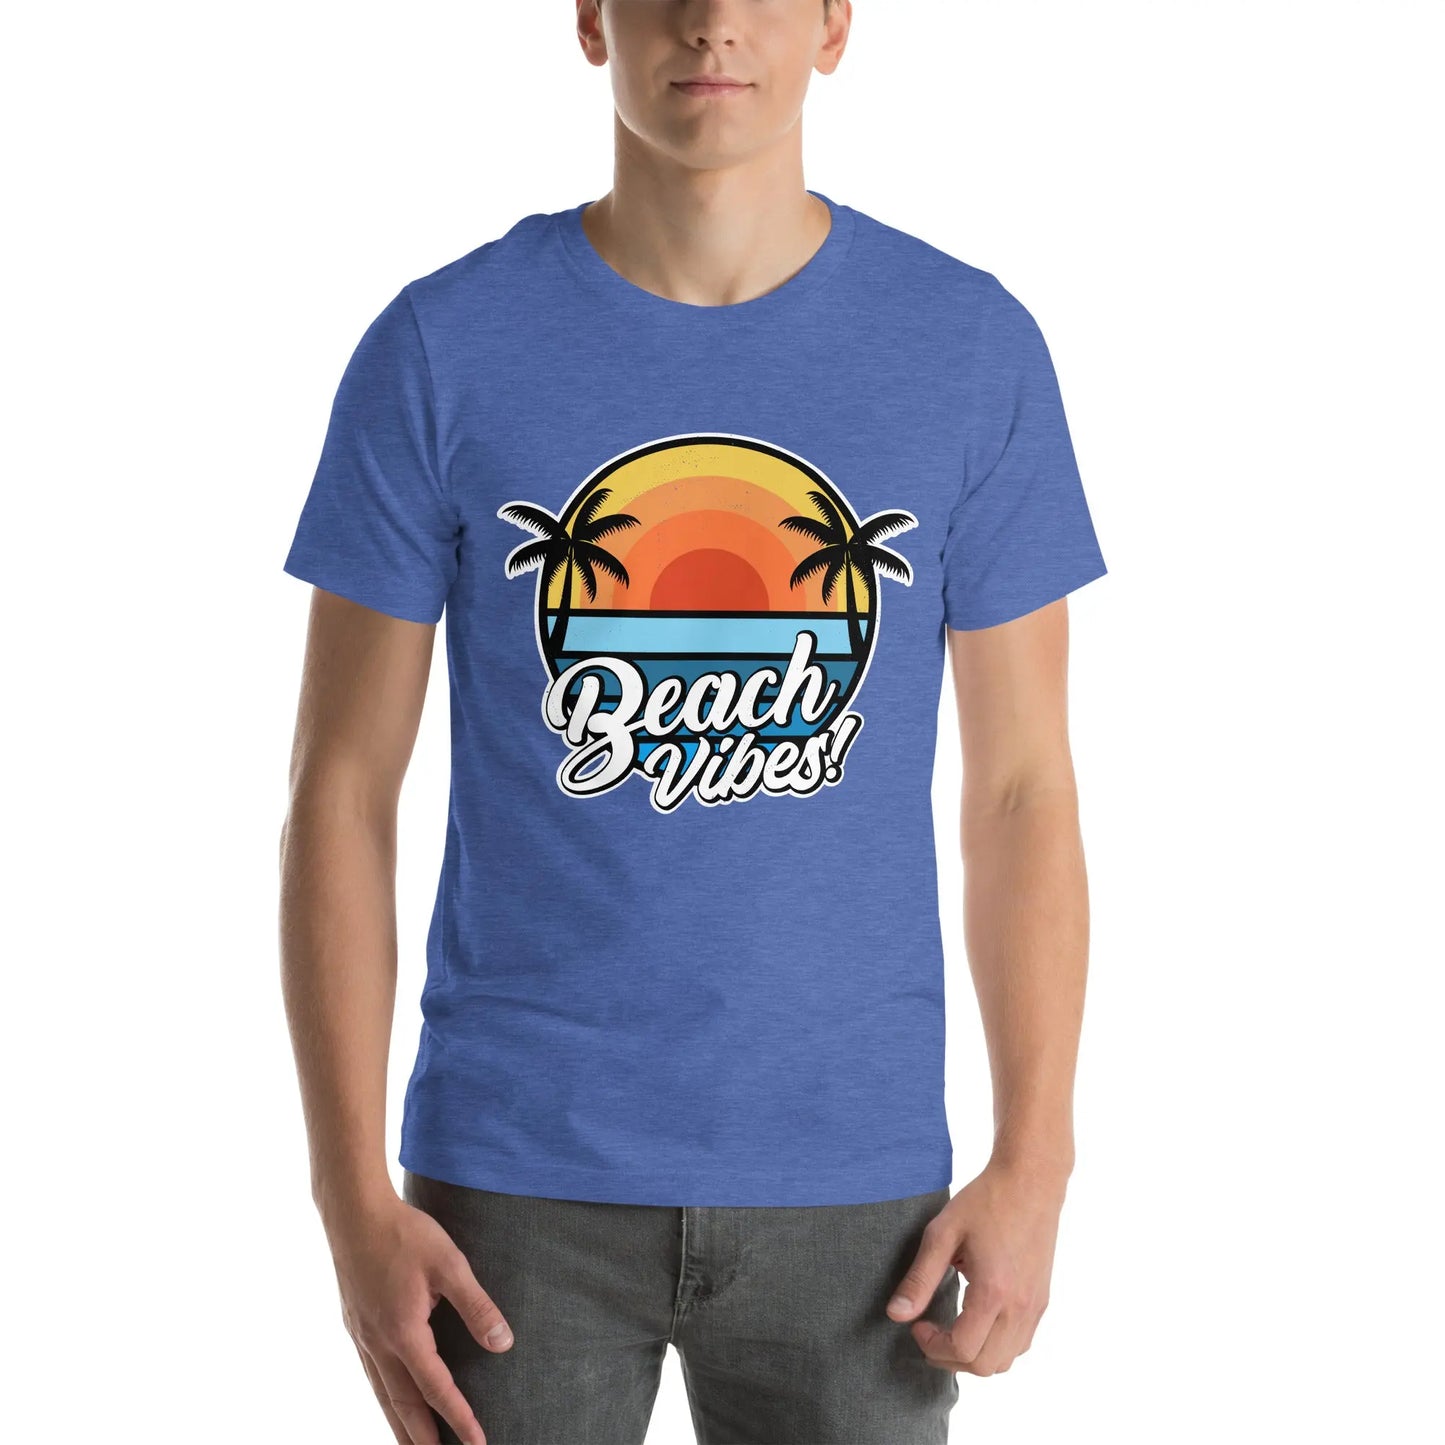 Beach Vibes with this Coastal Adult Unisex T-Shirt - Coastal Journeyz9496443_8530